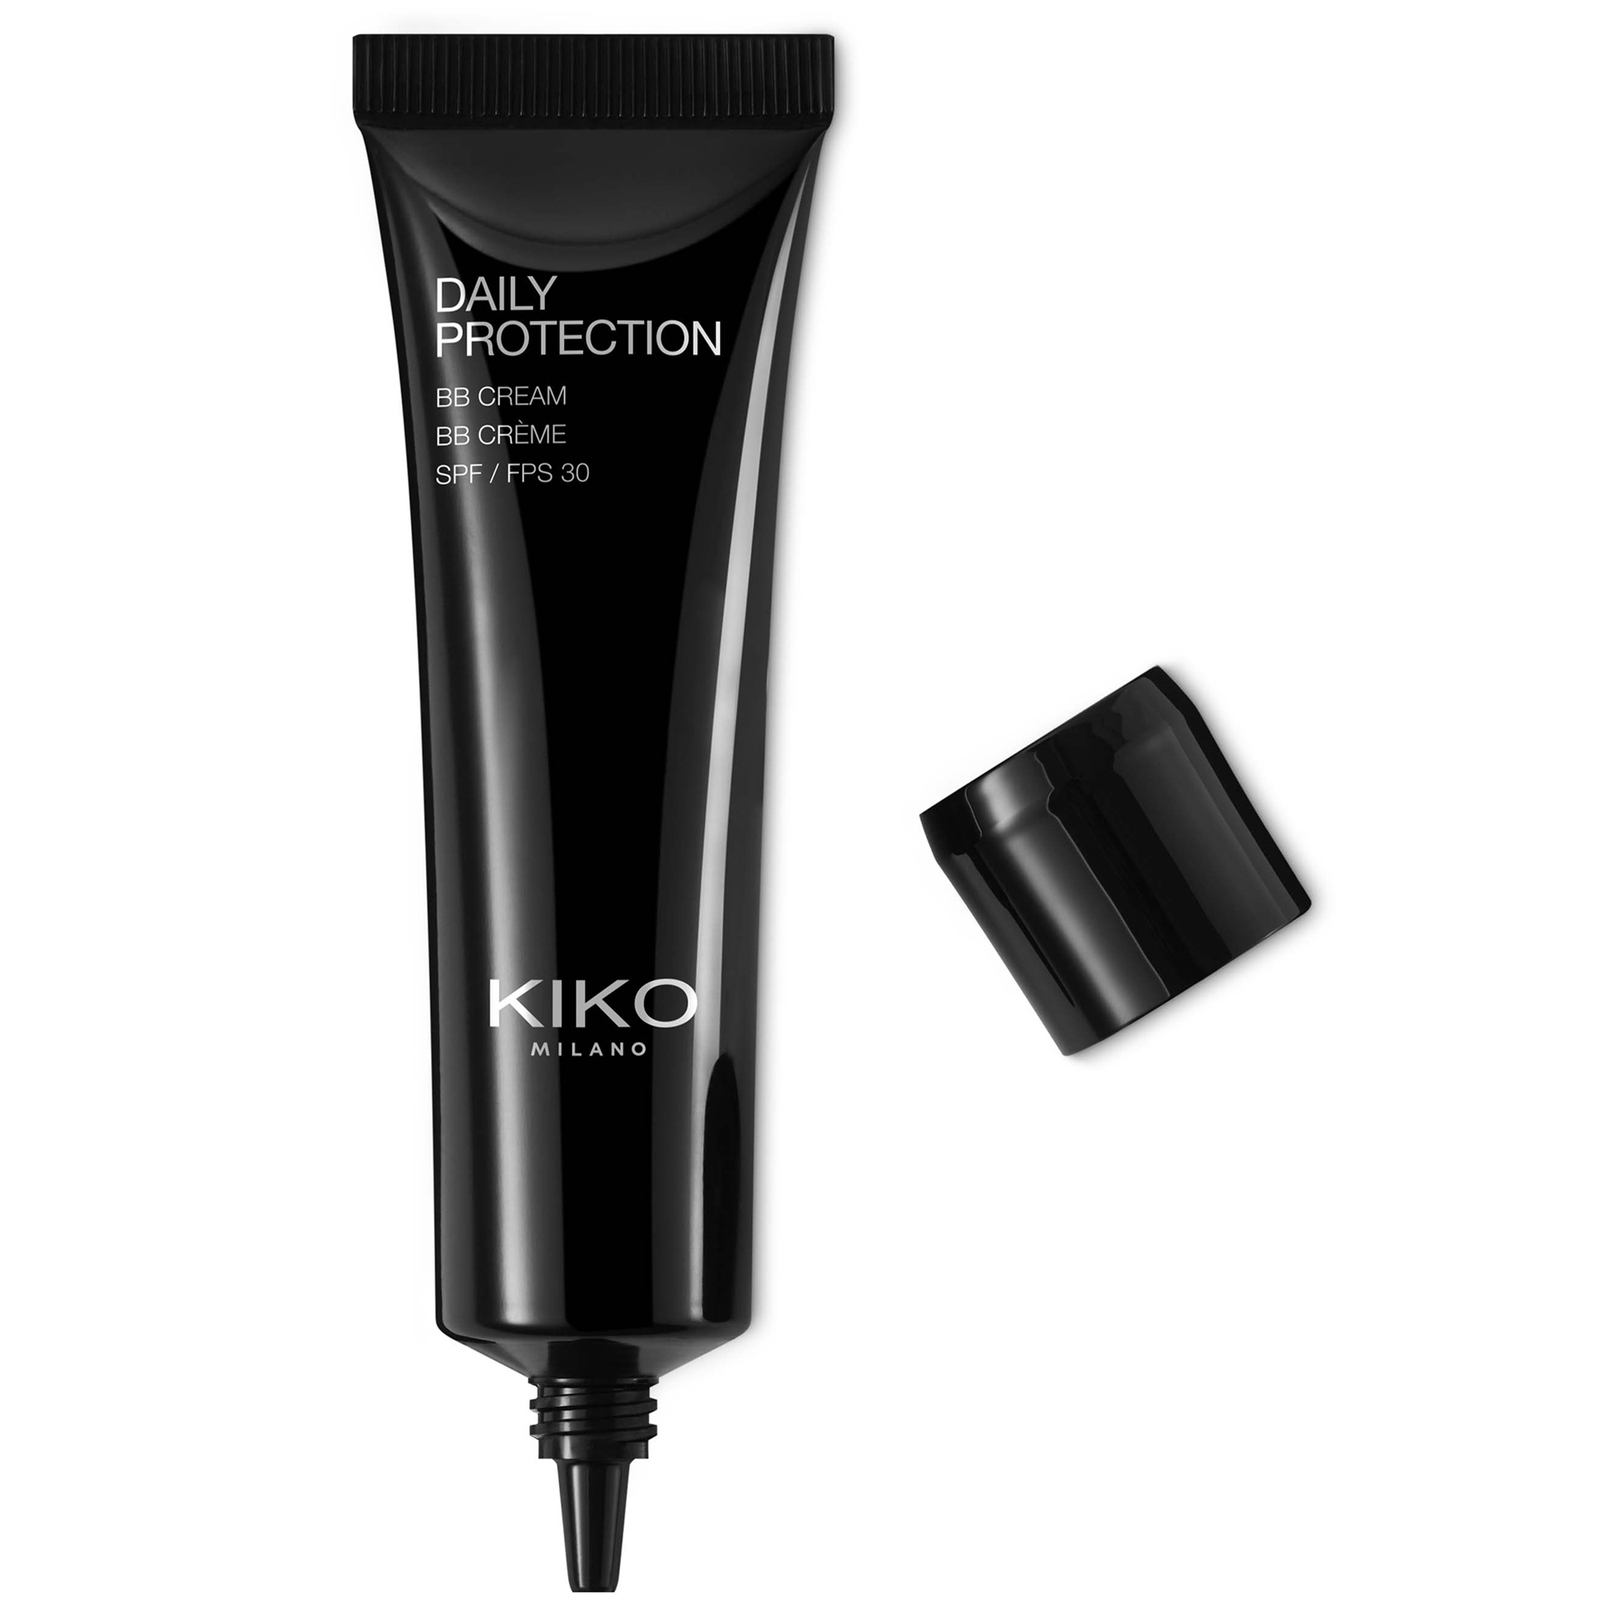 KIKO Milano Daily Protection BB Cream SPF 30 30ml (Various Shades) - 05 Caramel